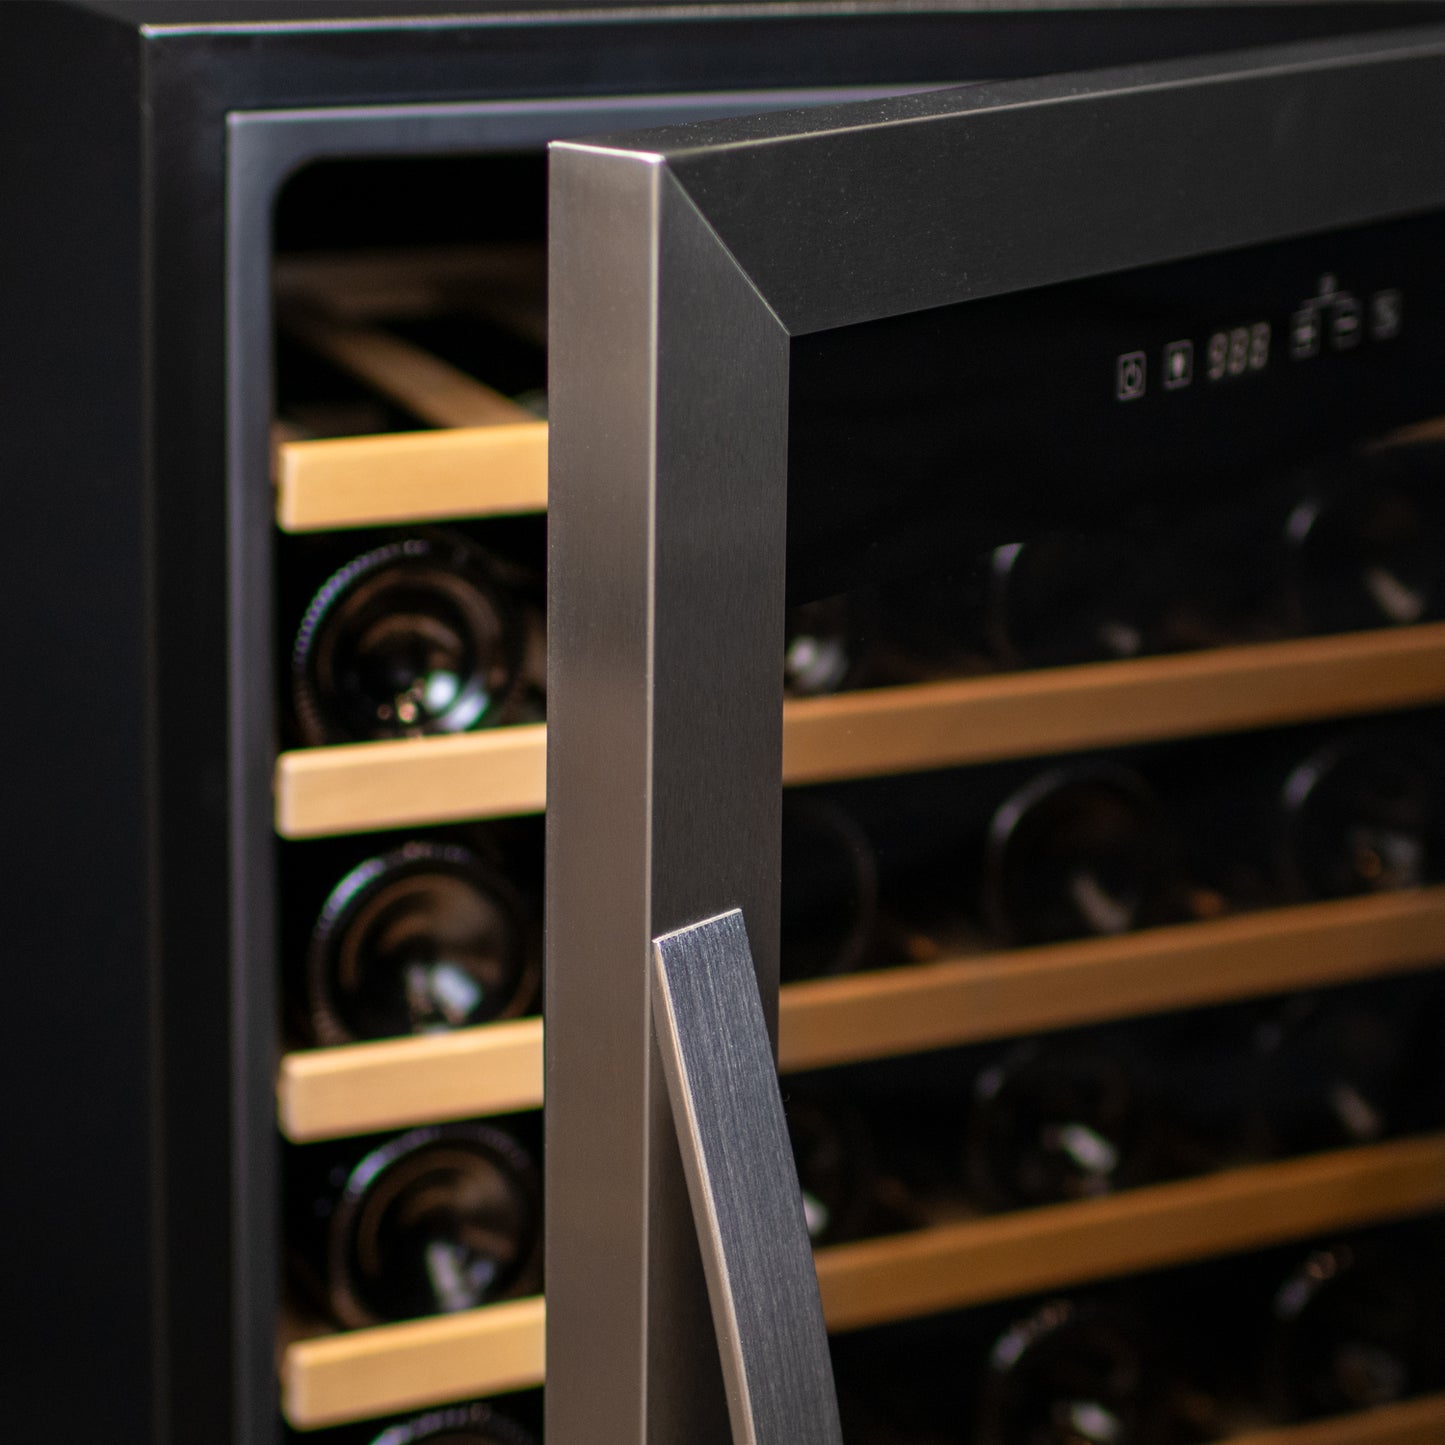 Allavino Cascina Series 47 Bottle Dual Zone Freestanding Wine Cooler Refrigerator with Stainless Steel Door